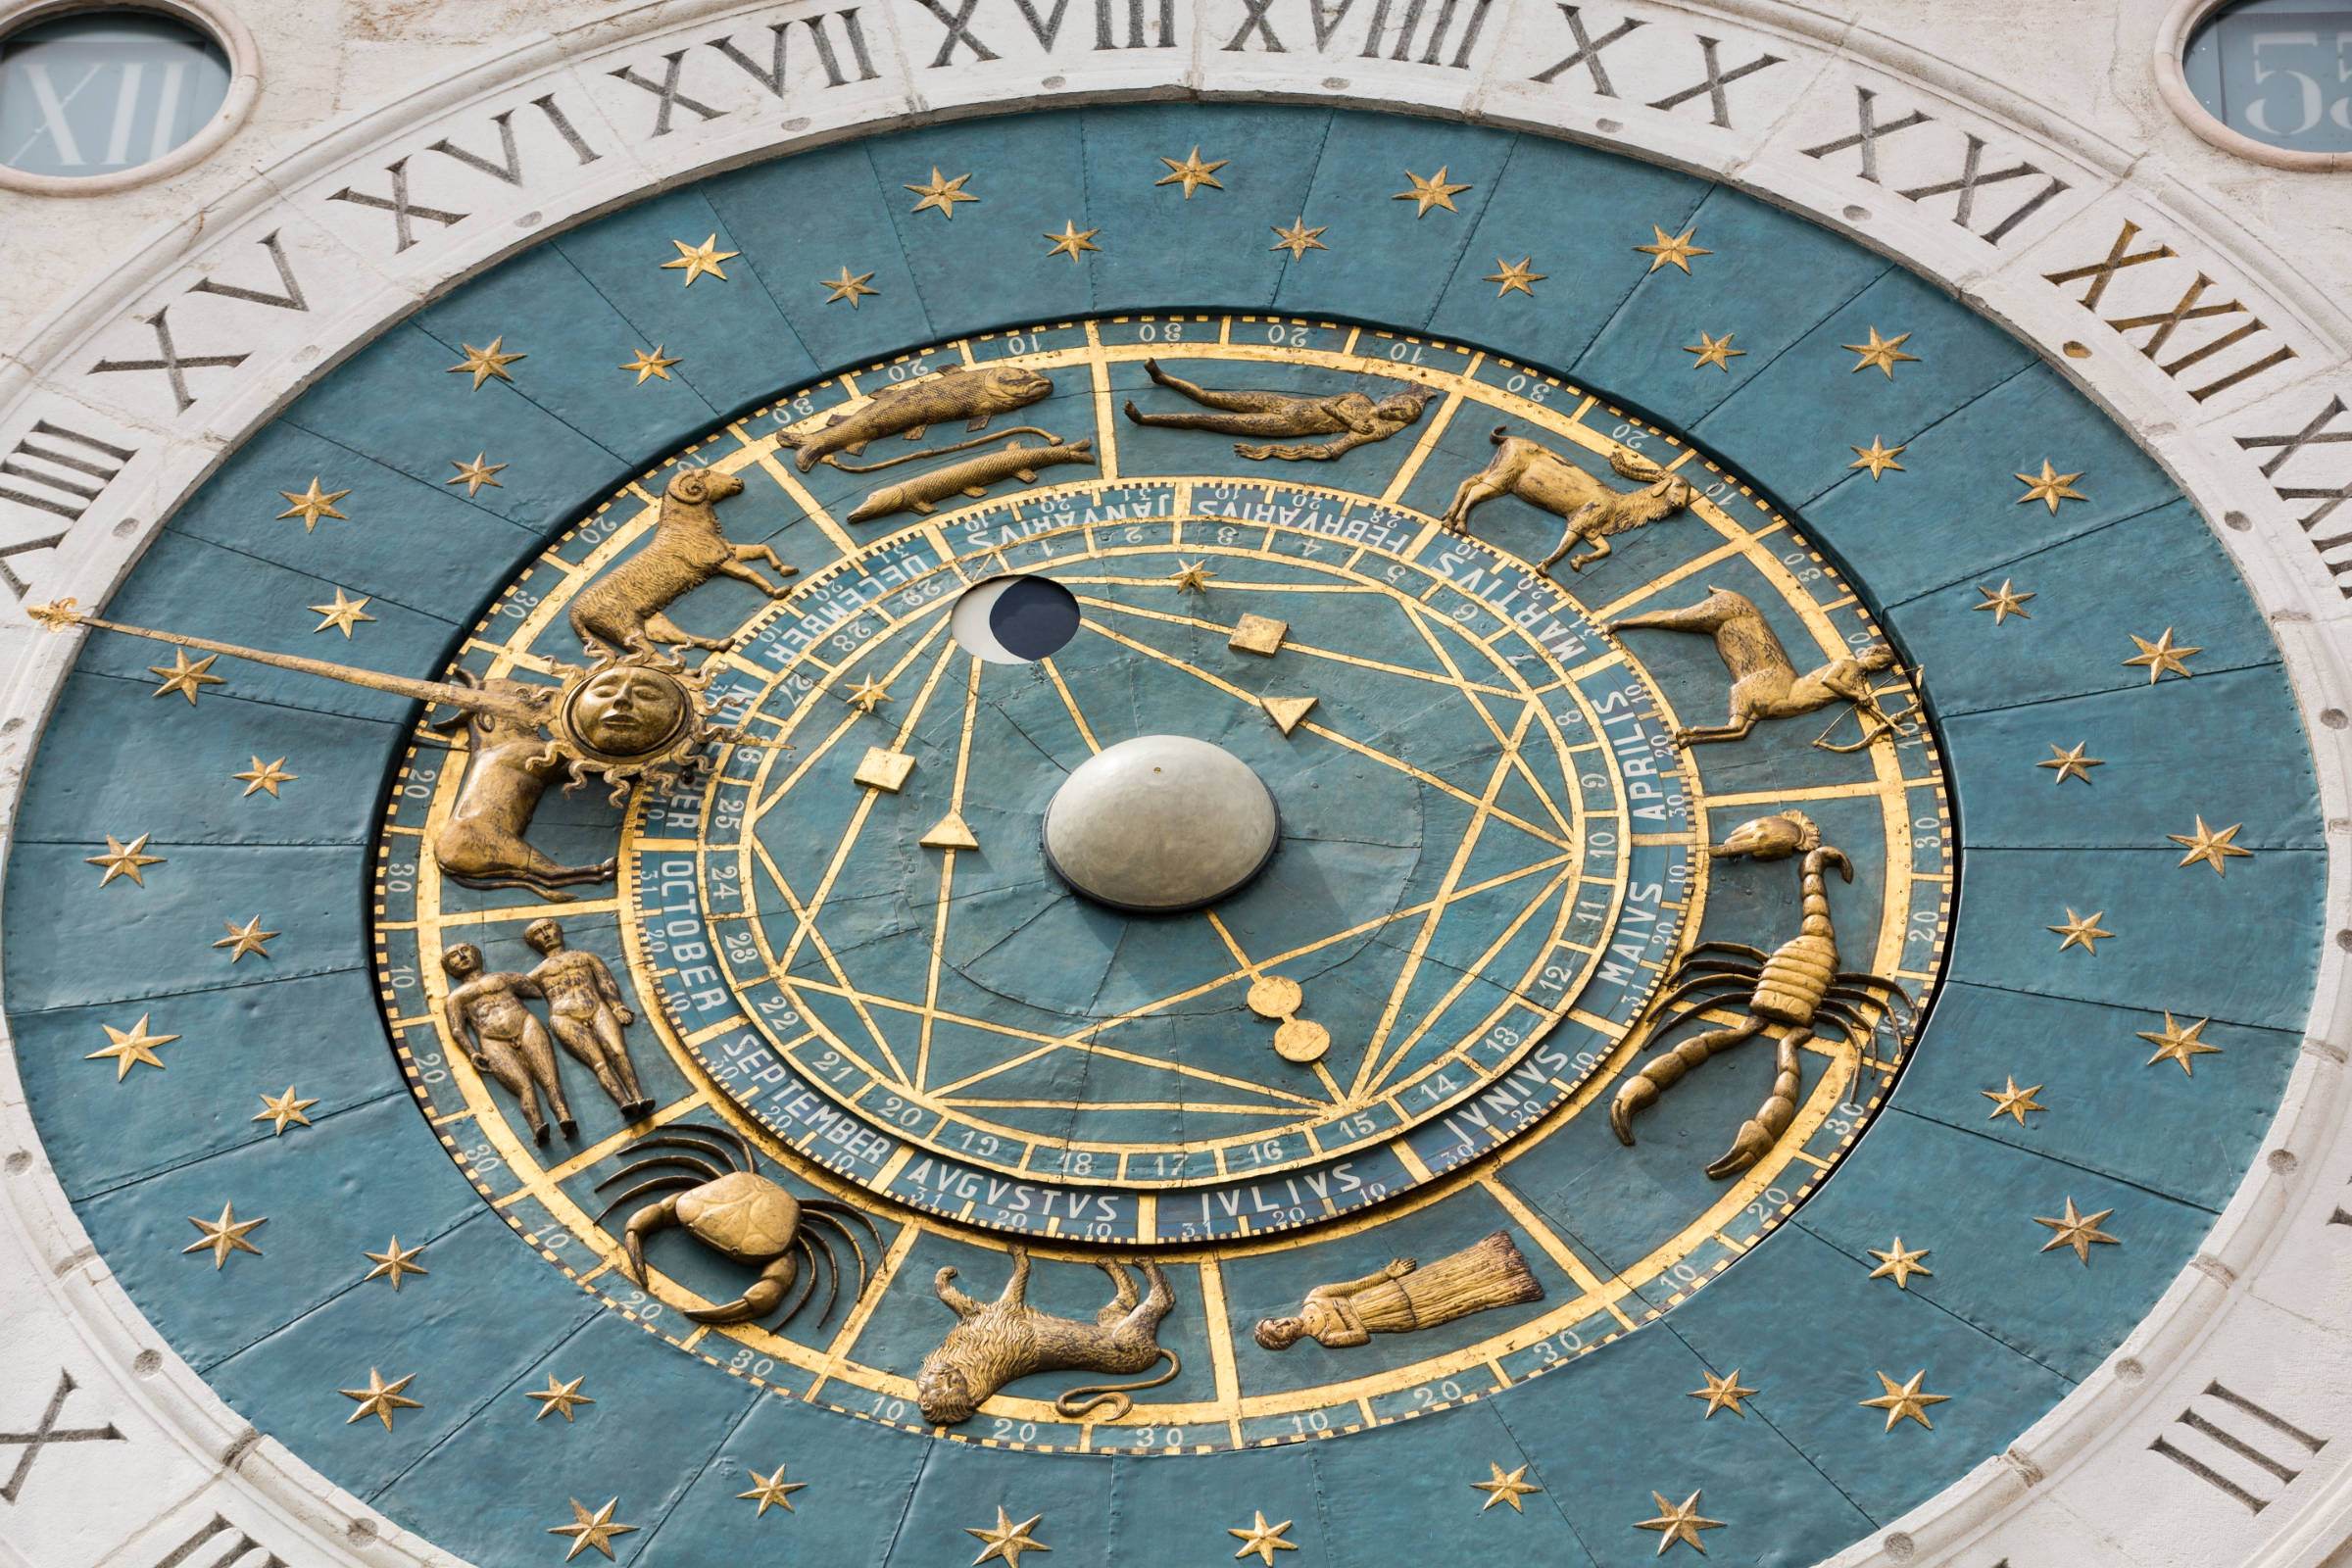 Professional Astrologer Cohort III Plus